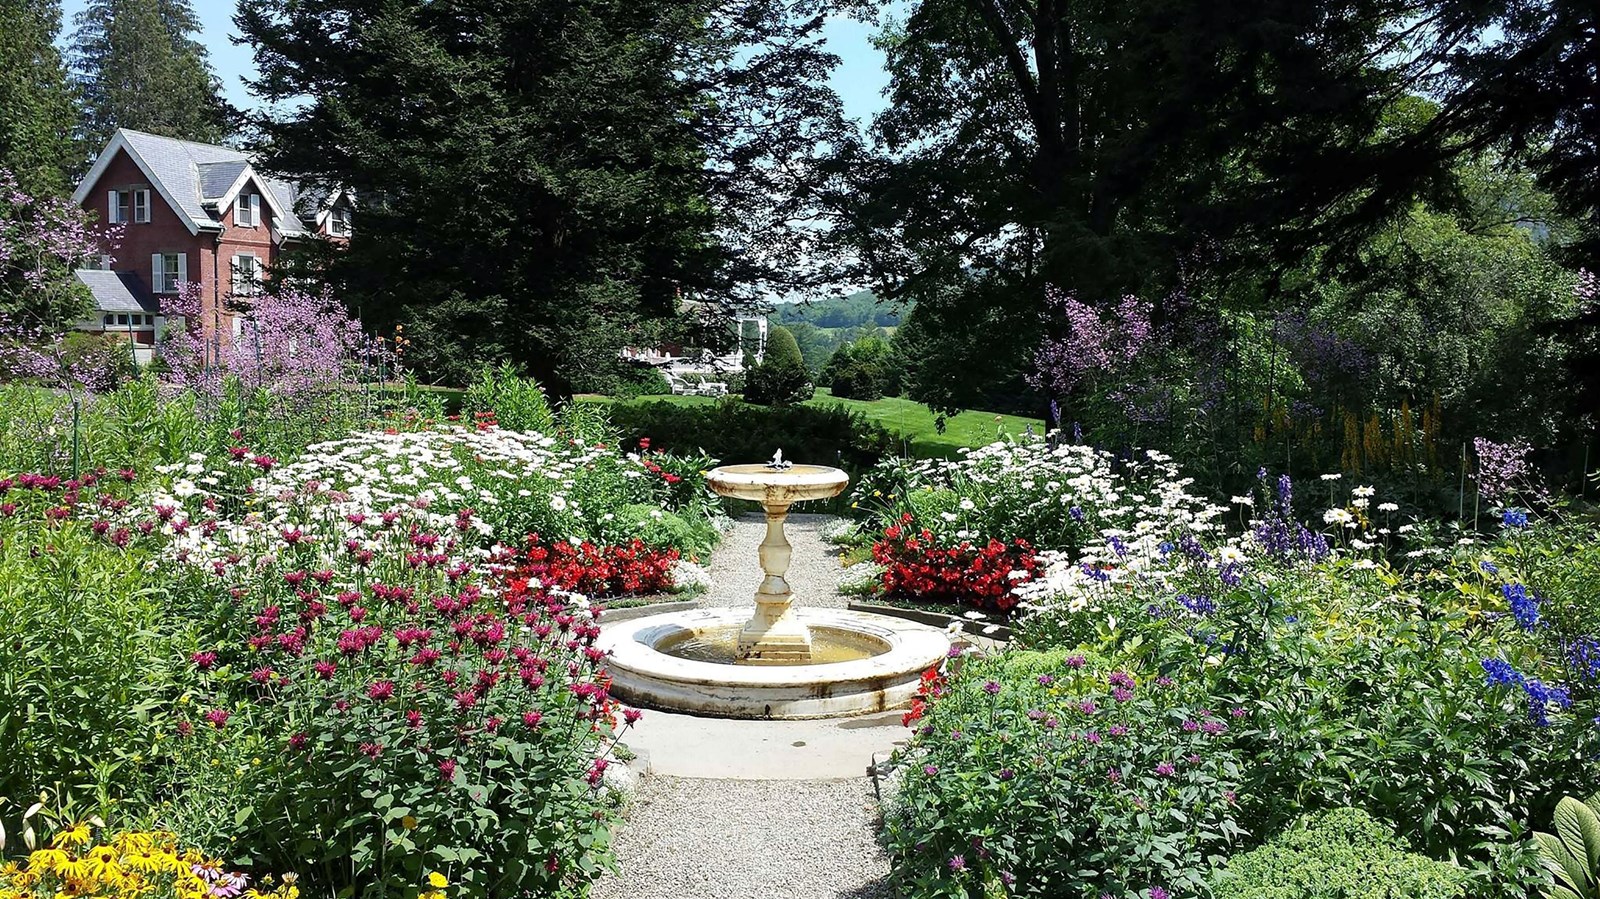 Formal garden at Marsh-Billings-Rockefeller NHP in full bloom